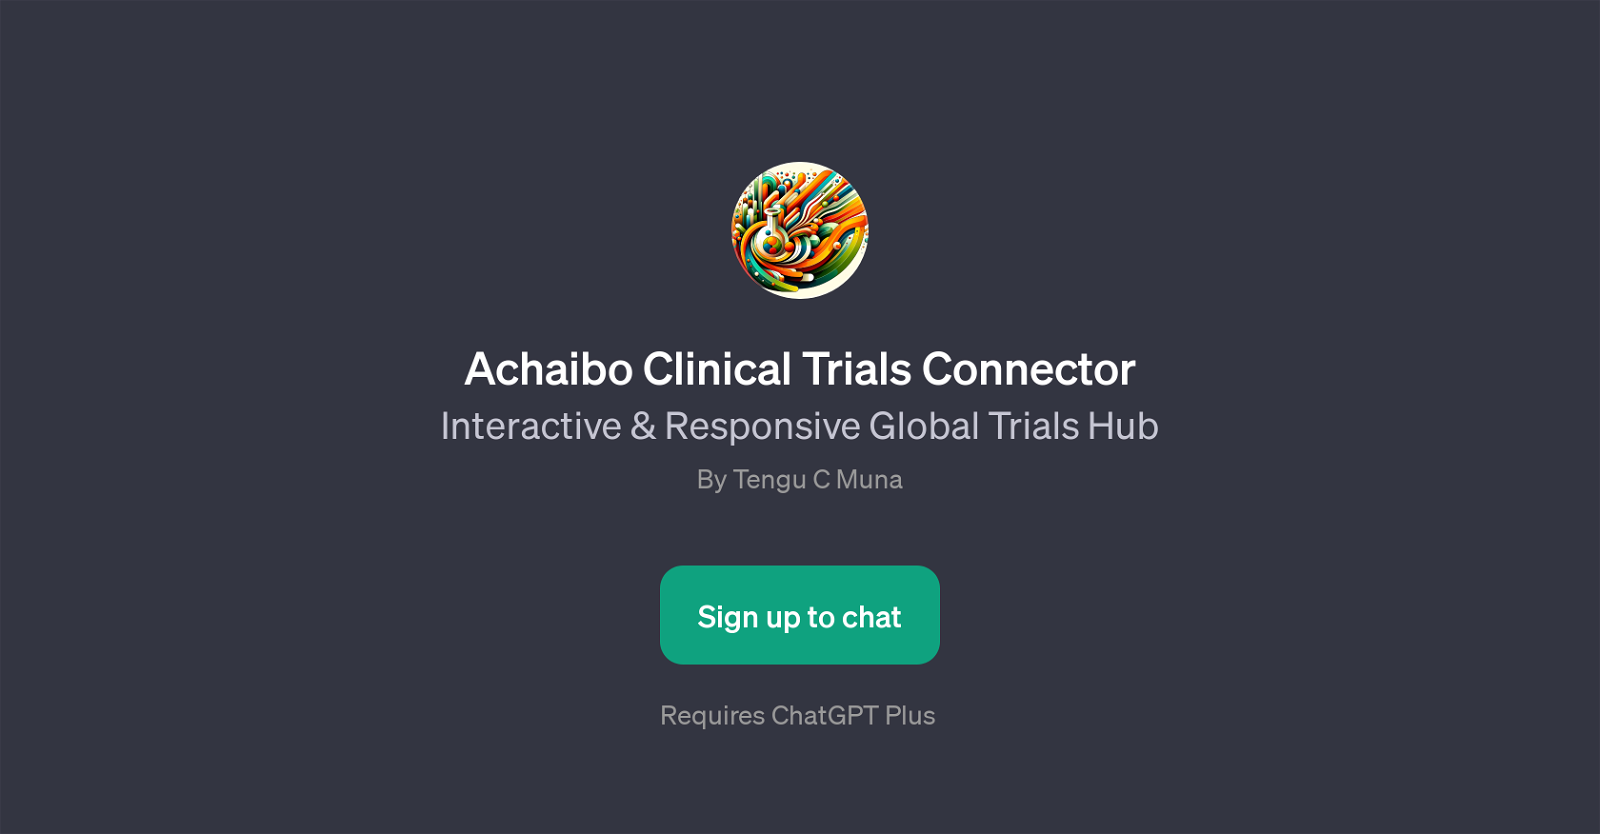 Achaibo Clinical Trials Connector website